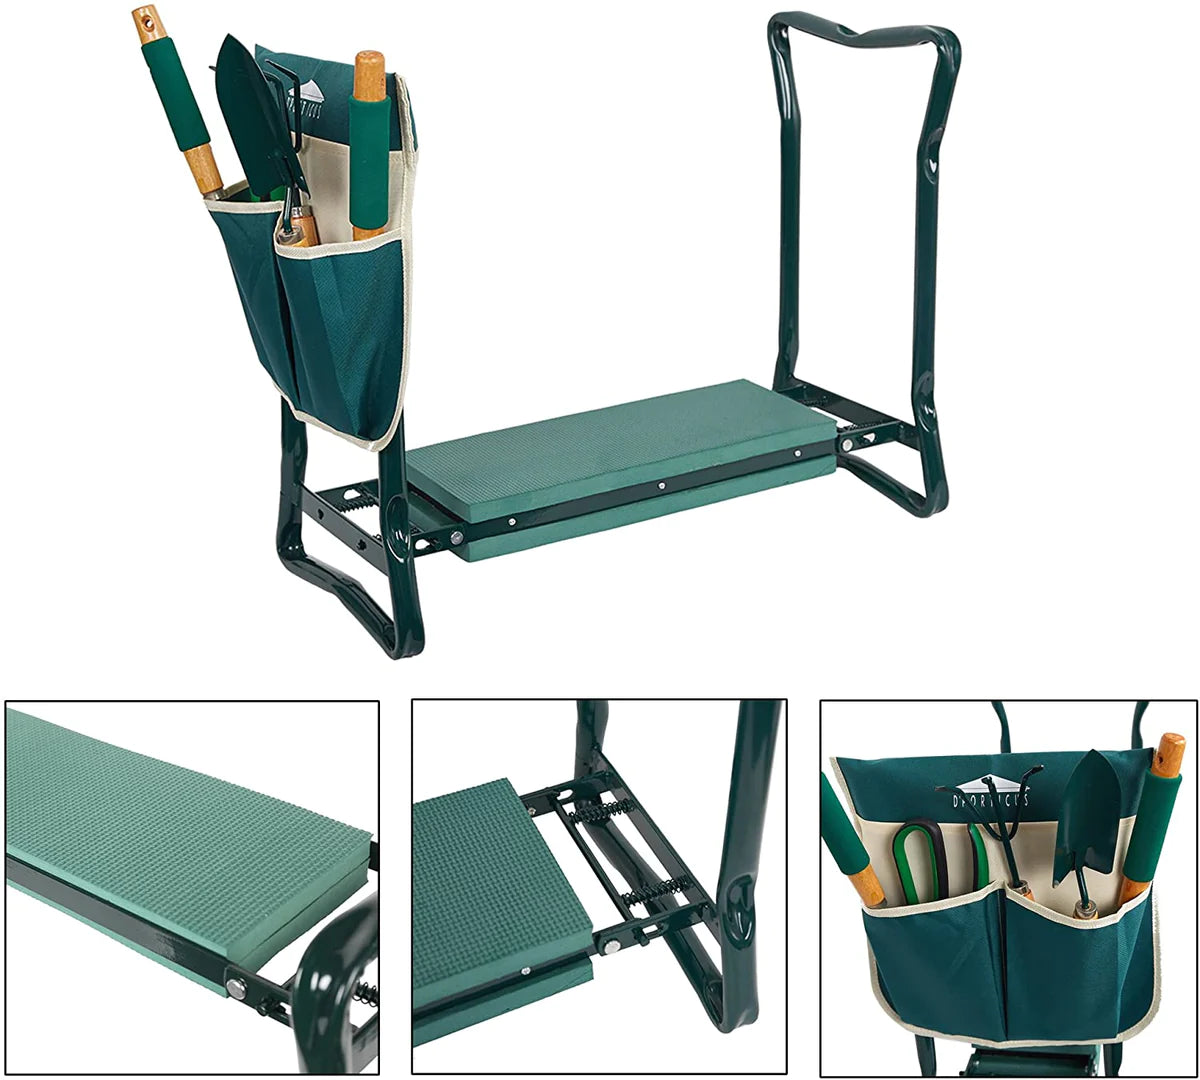 Portable Foldable Garden Kneeler Bench with Tools Bag, Green